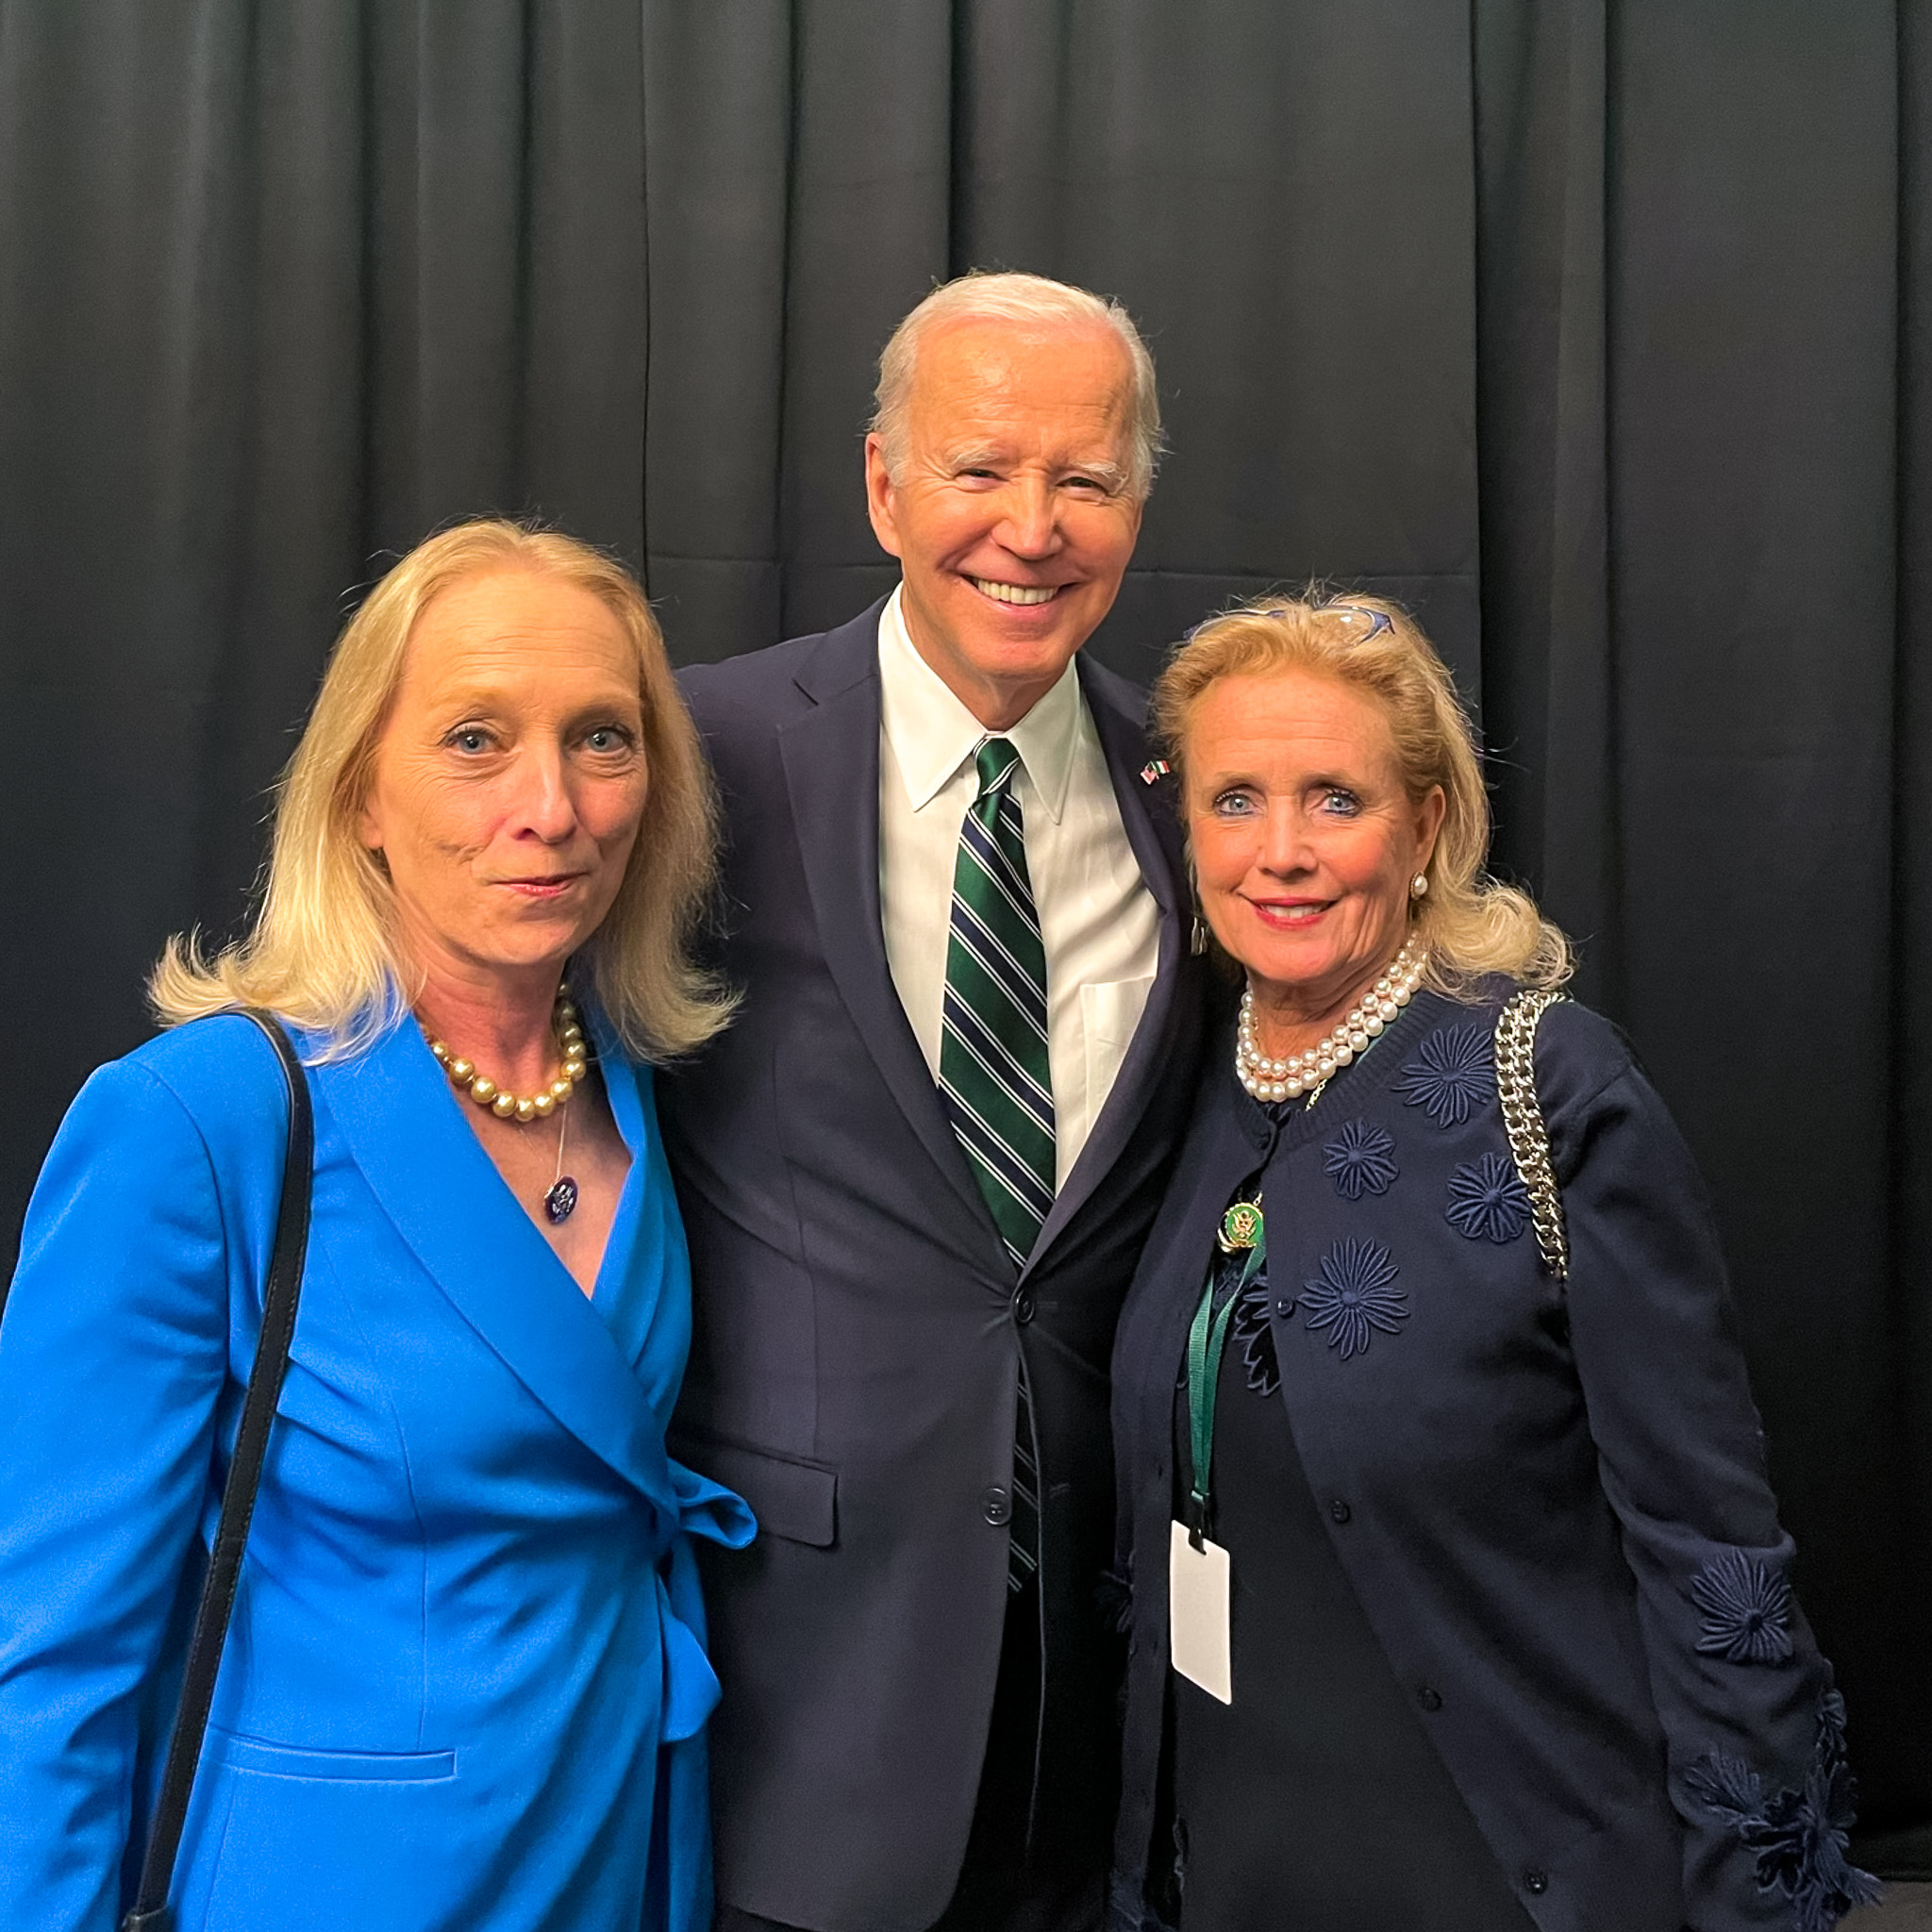 Rep. Dingell poses for a photo with US President Joe Biden and Congresswoman Mary Gay Scanlon of Pennsylvania